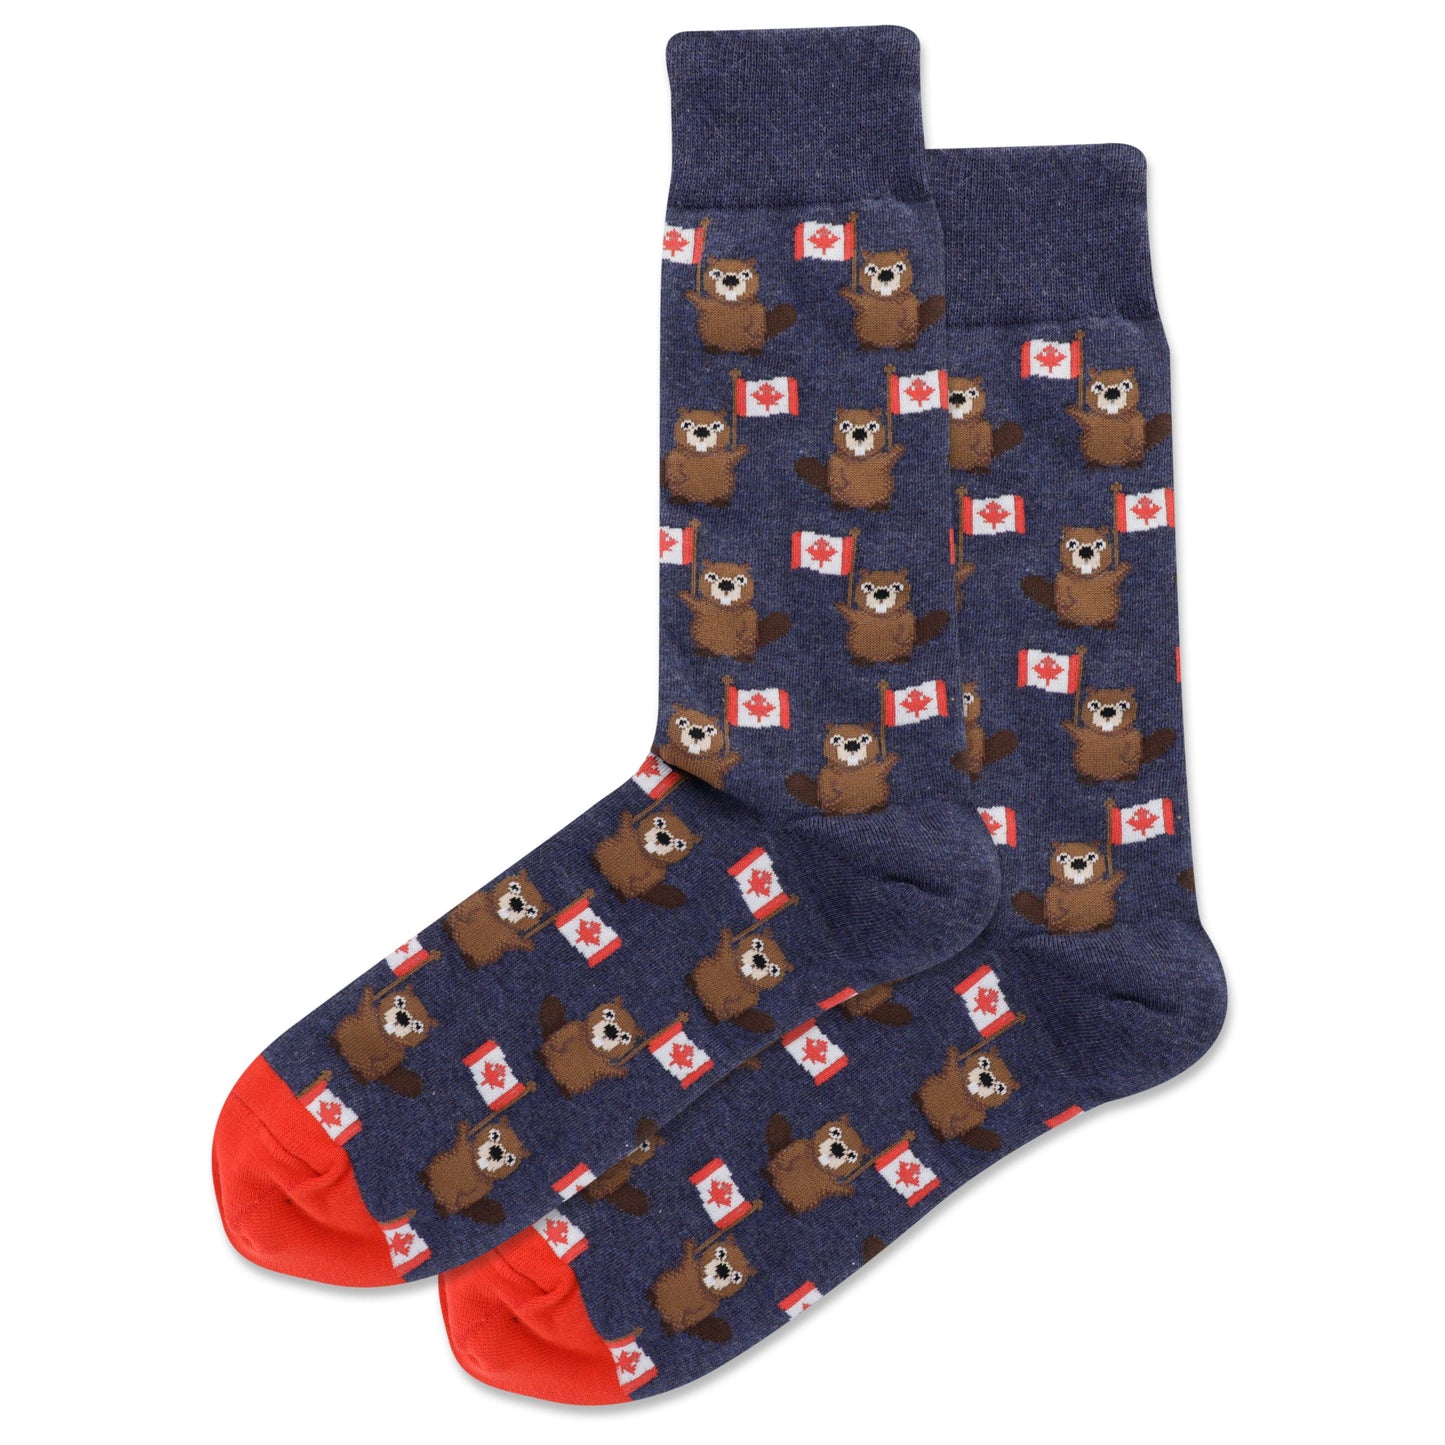 Canada Beavers Men's Crew Socks